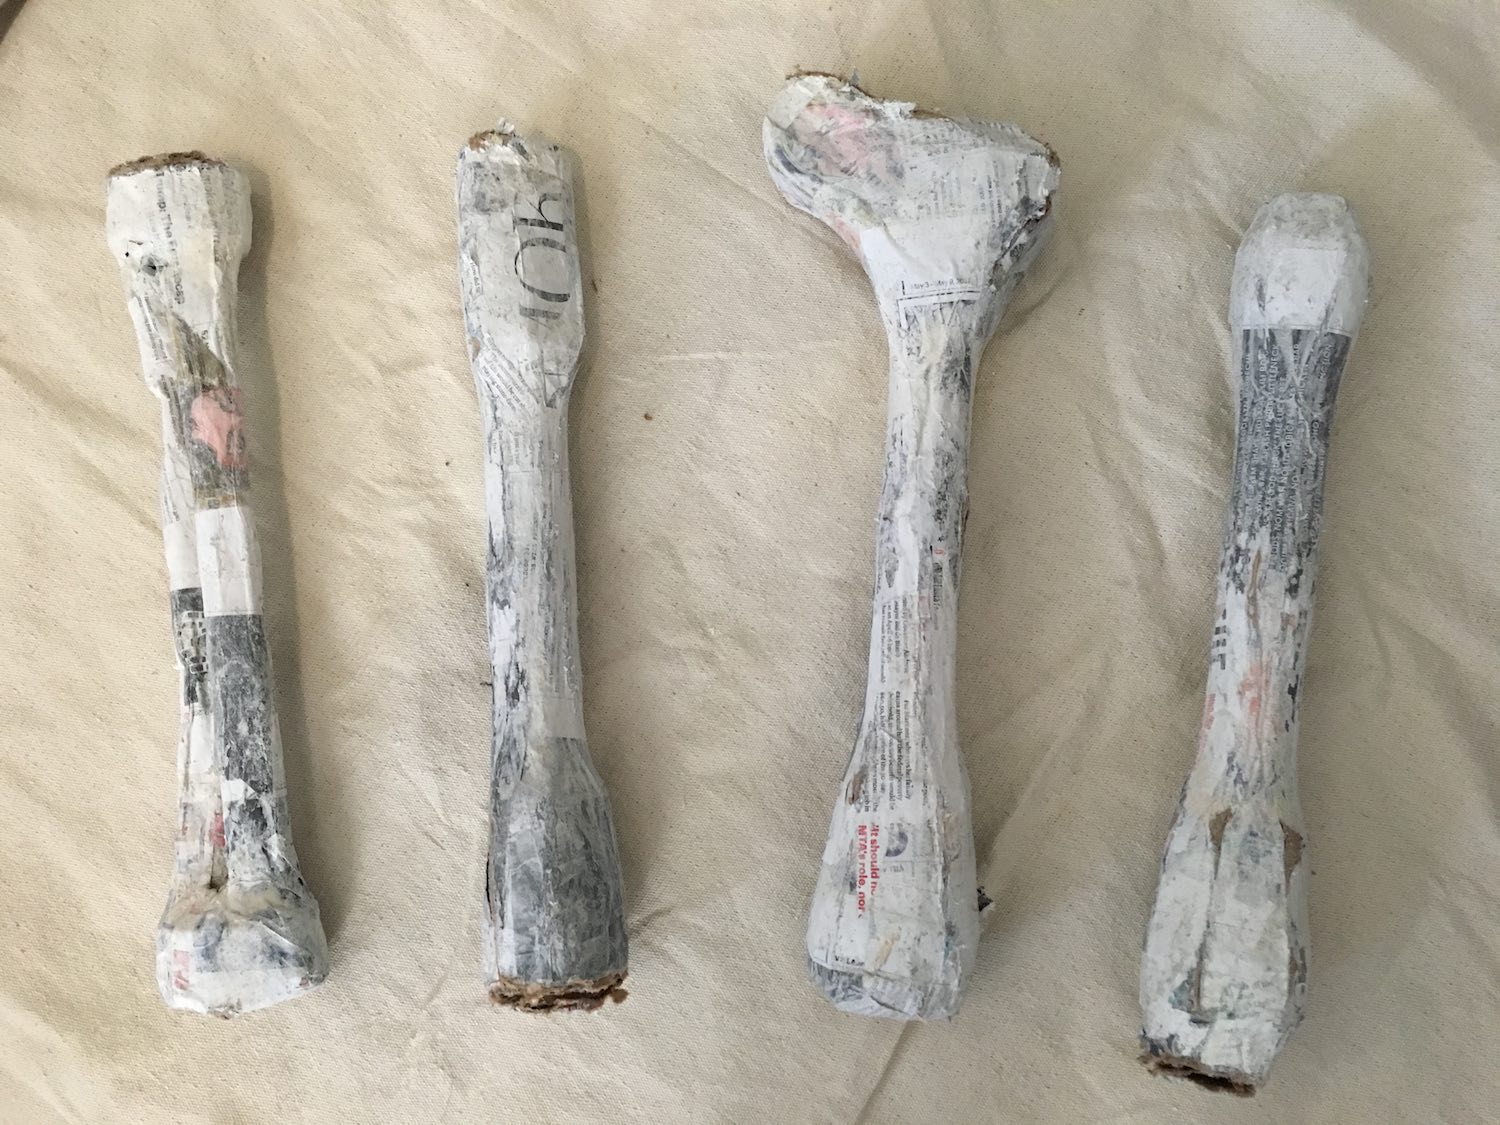 Four papier-mâché limb bones lying side by side